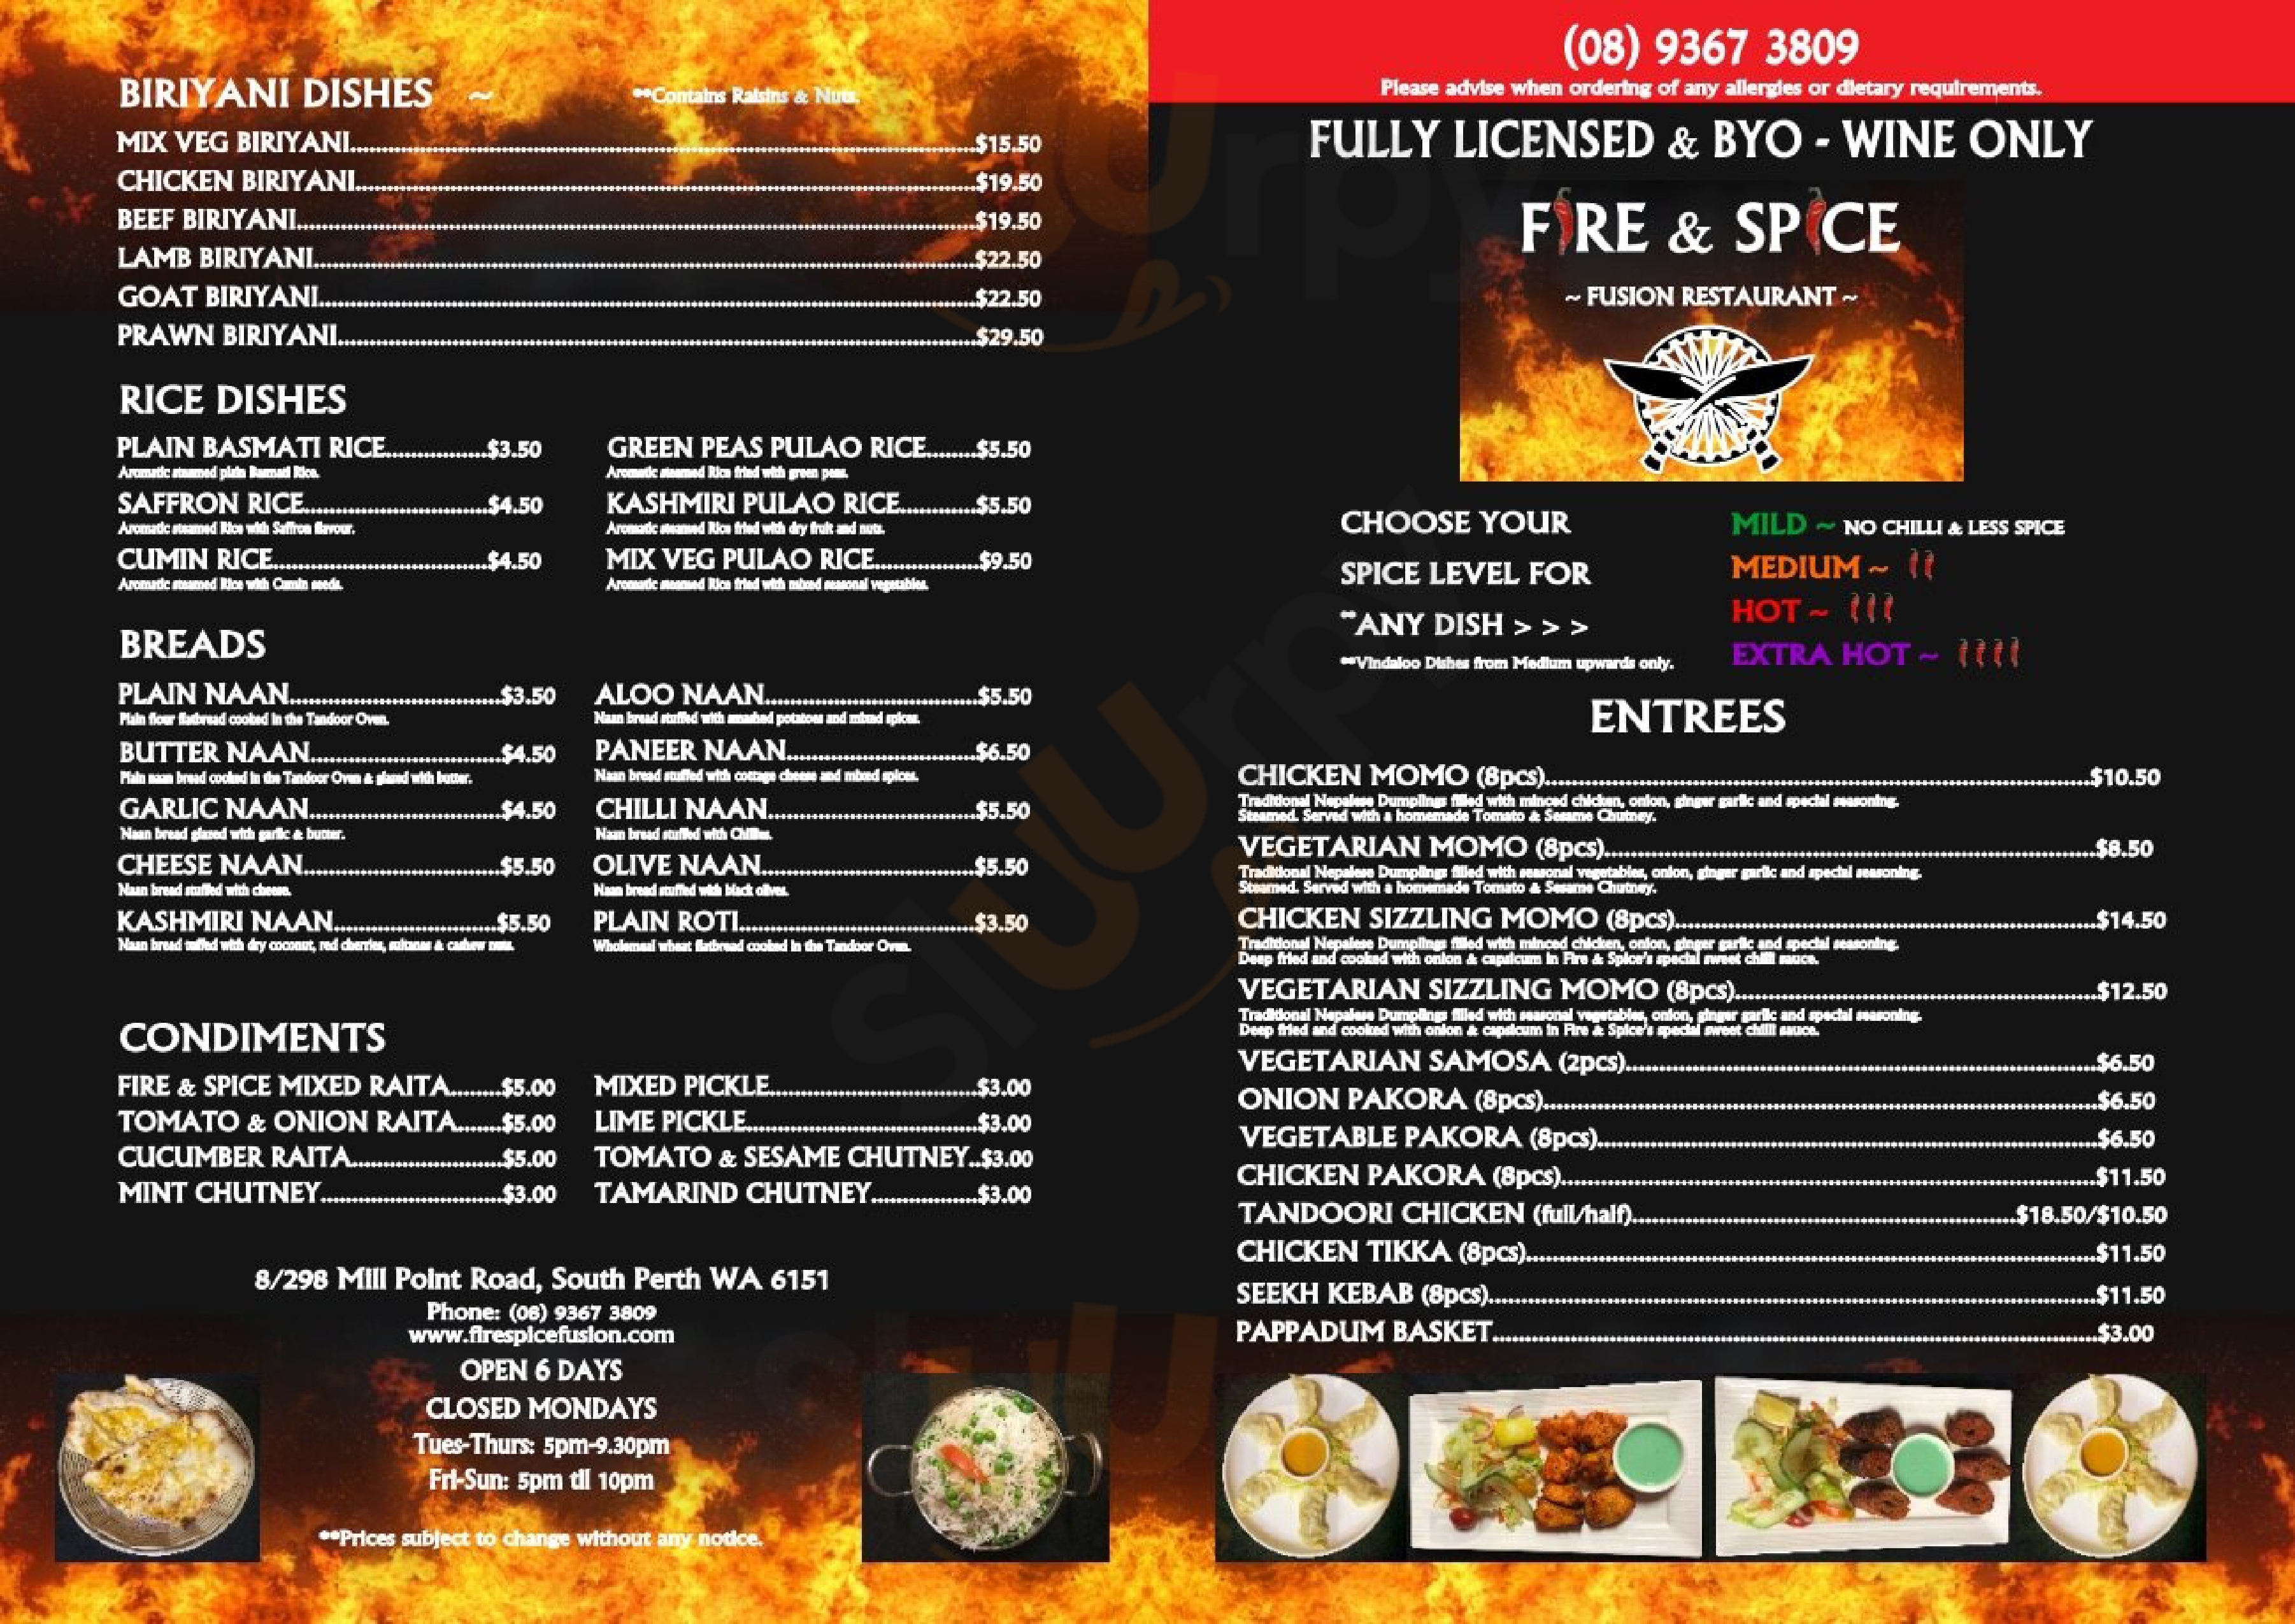 Fire & Spice - Fusion Restaurant South Perth Menu - 1